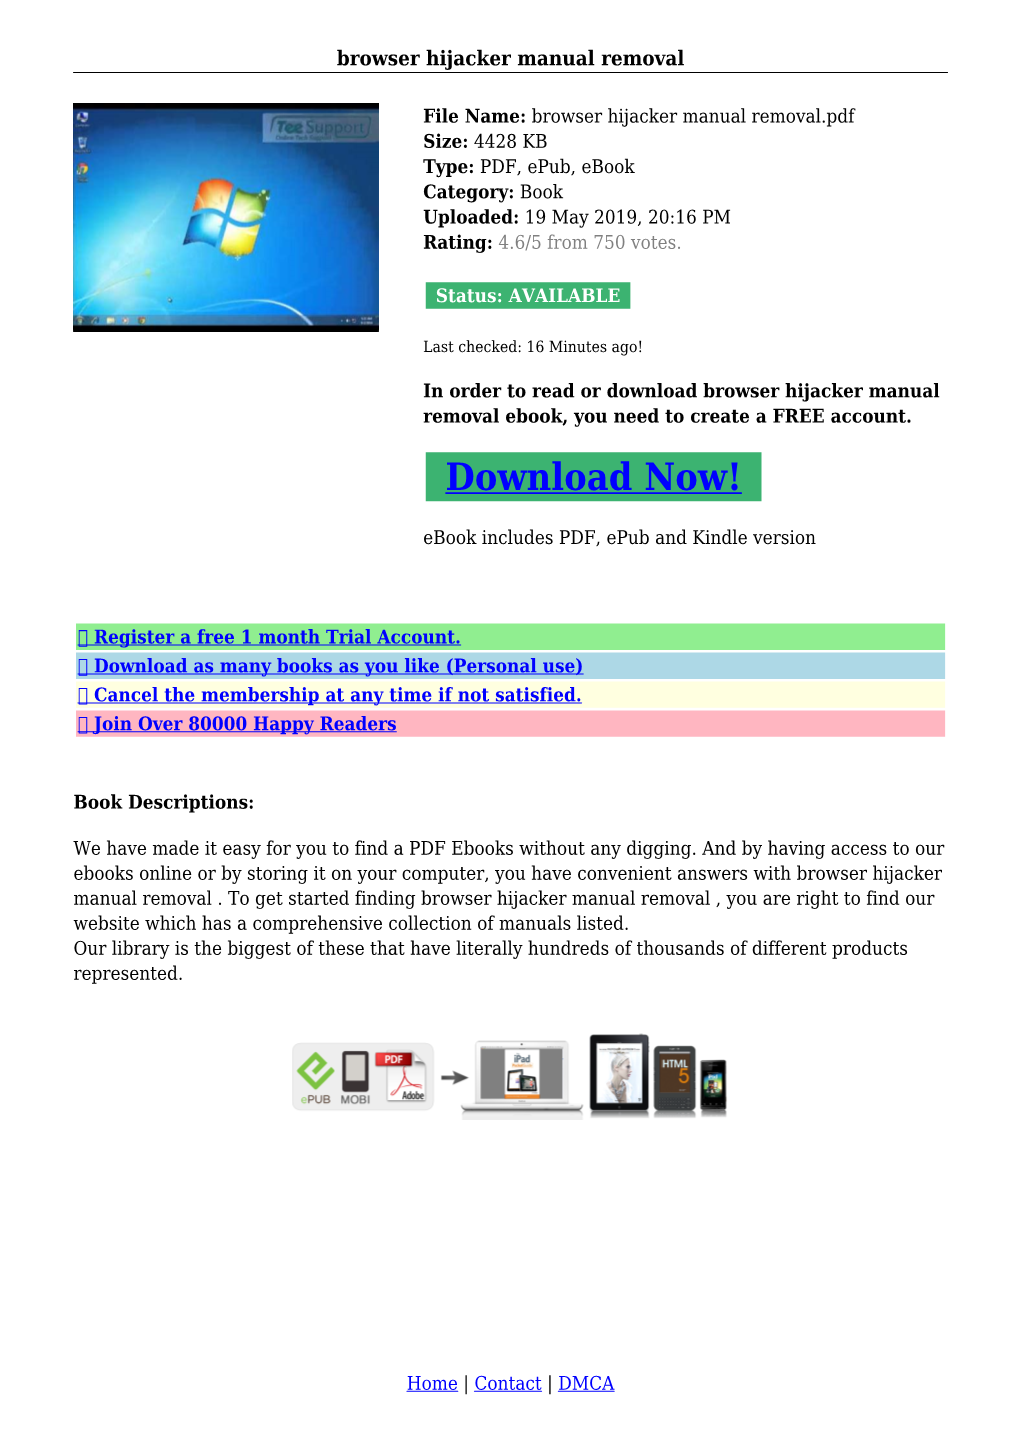 Browser-Hijacker-Manual-Removal.Pdf